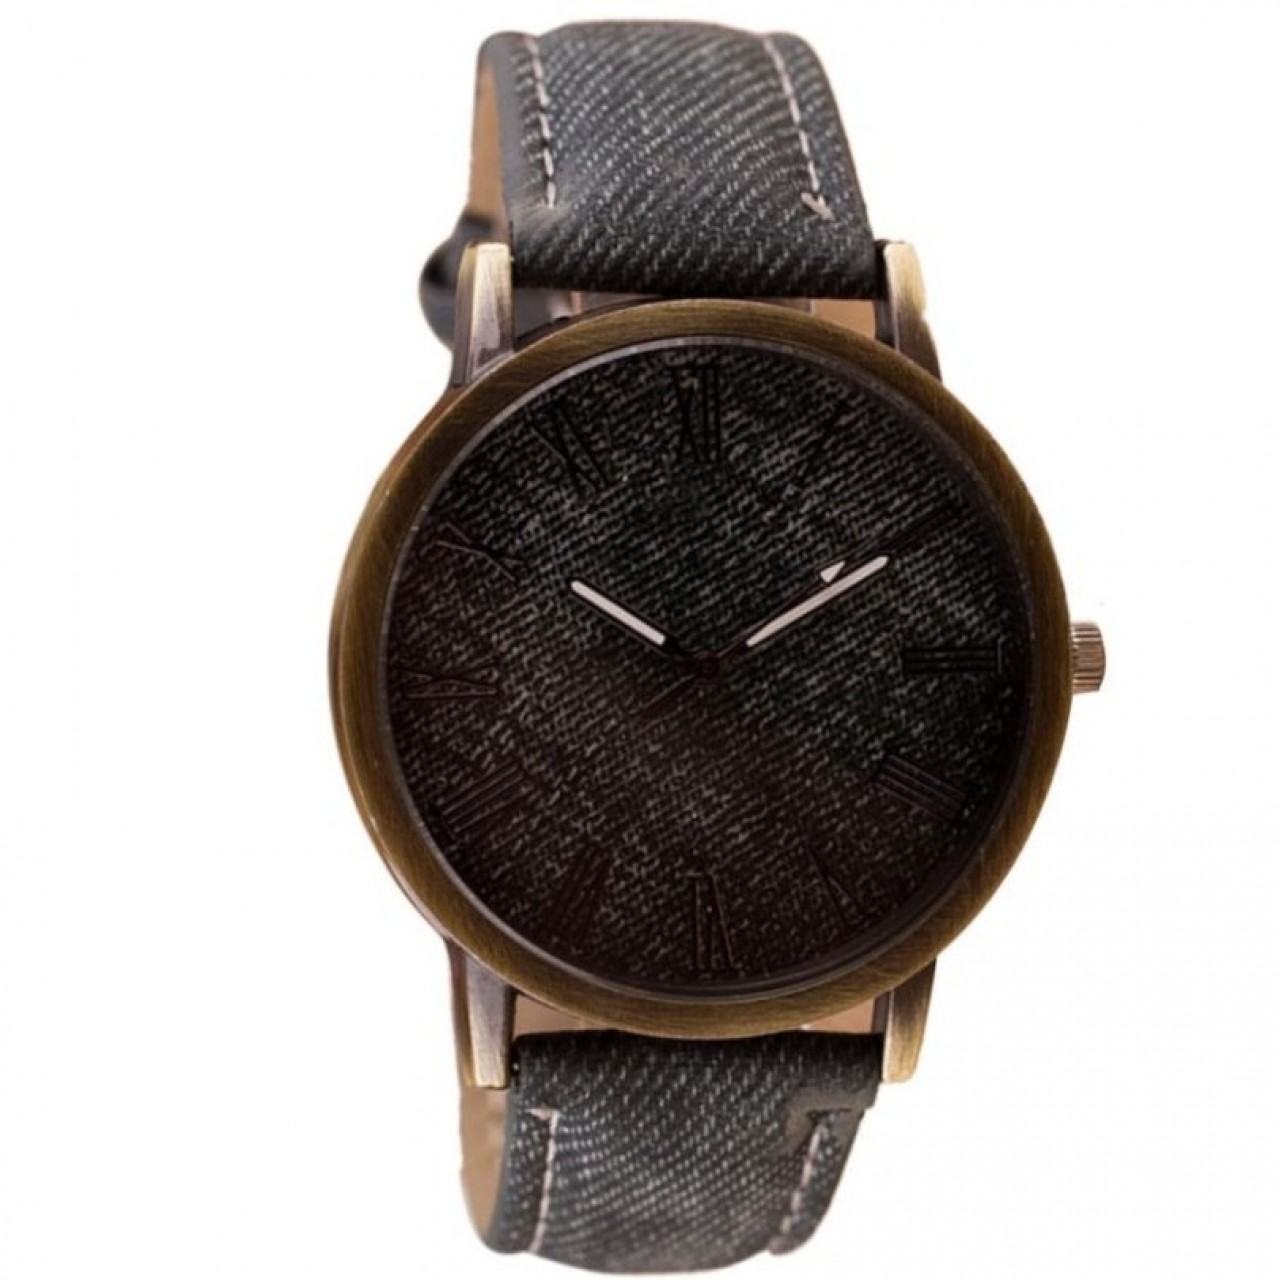 Retro Vogue Men Wrist Watch Cowboy Leather Band Analog Quartz Watch